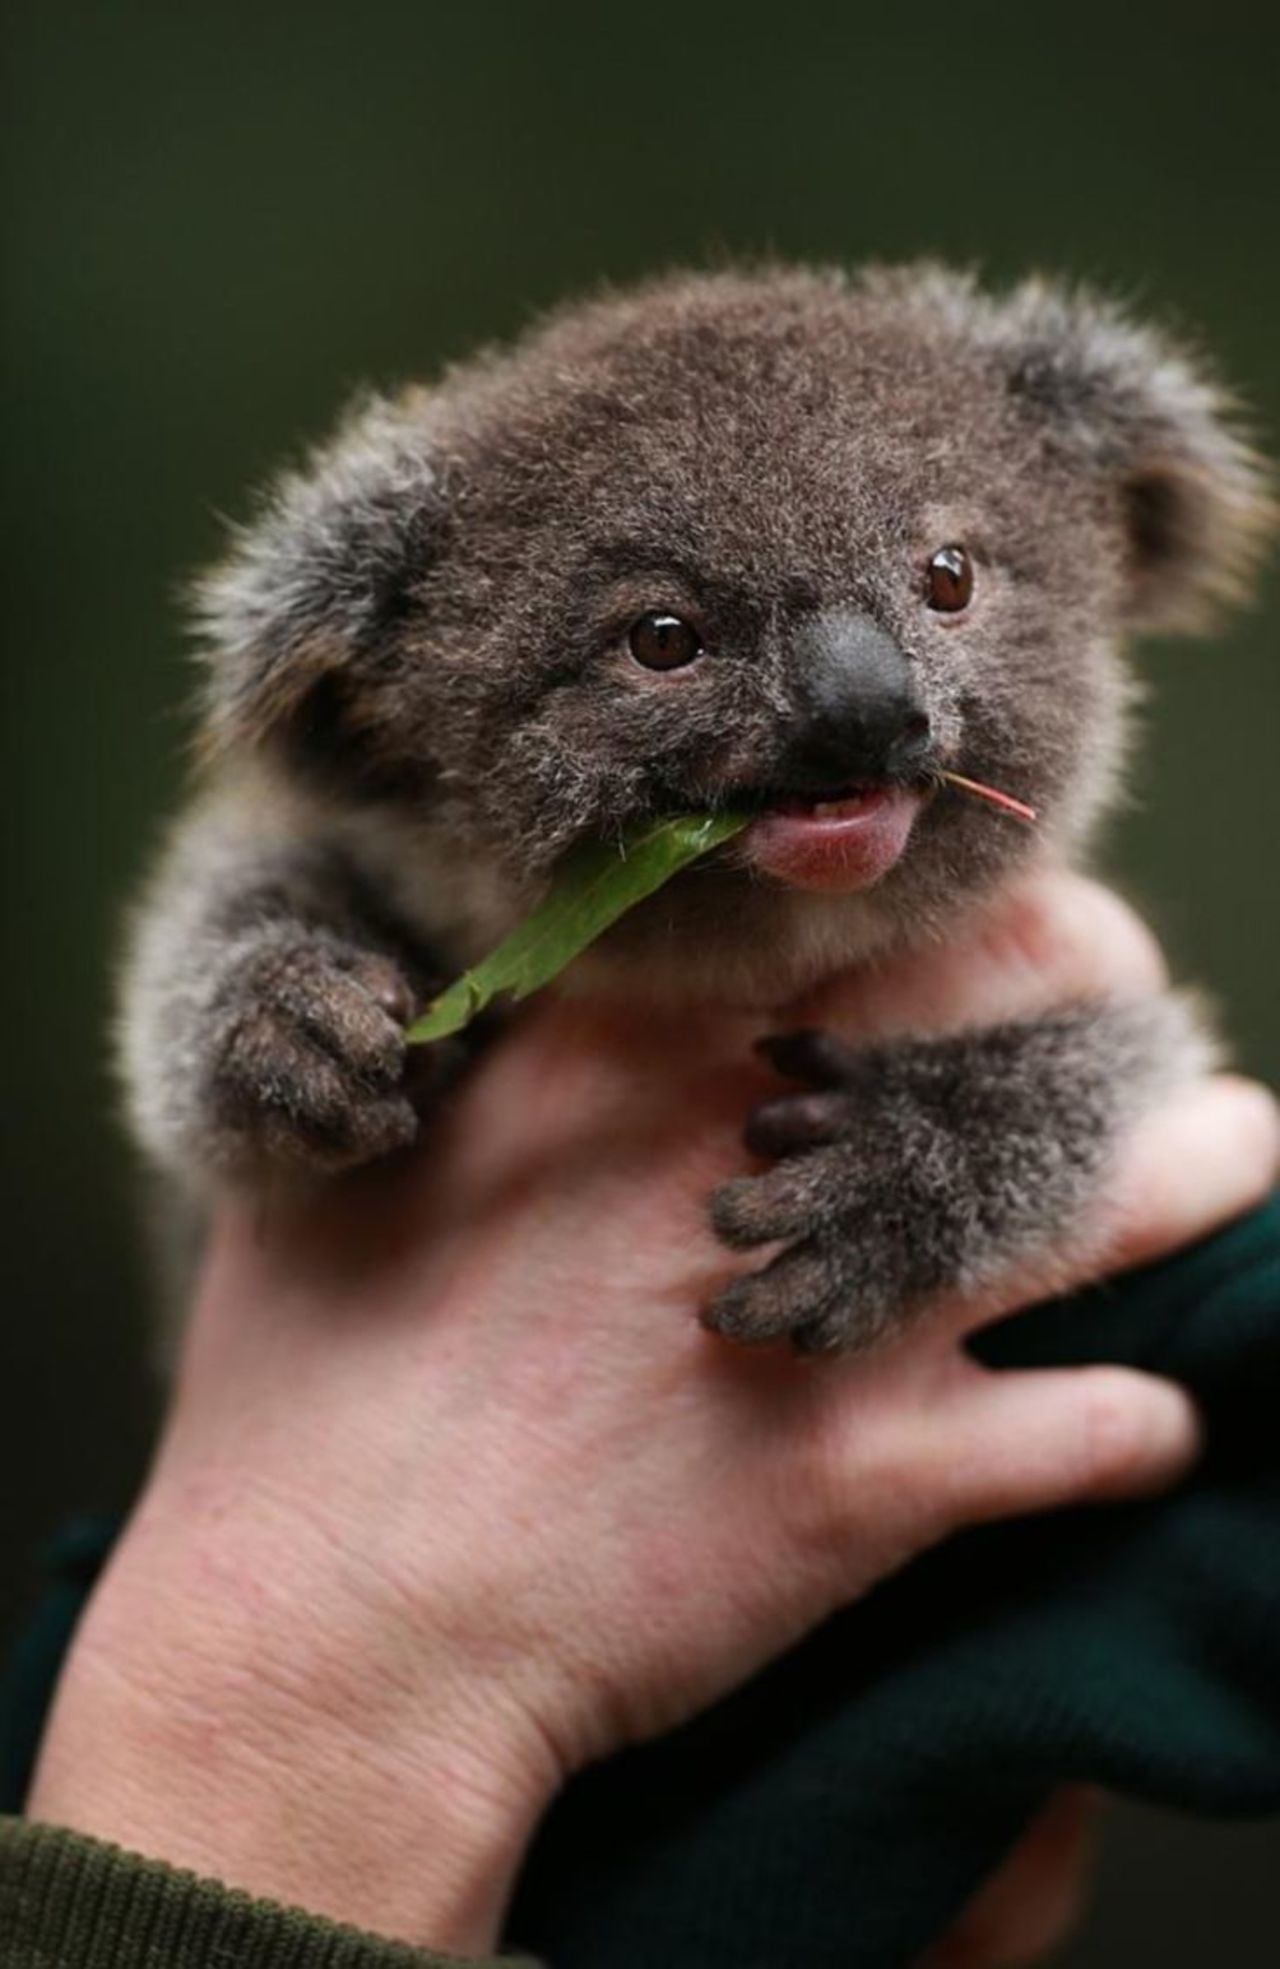 Baby Koala http://t.co/kogvw25pPU #nature #animals